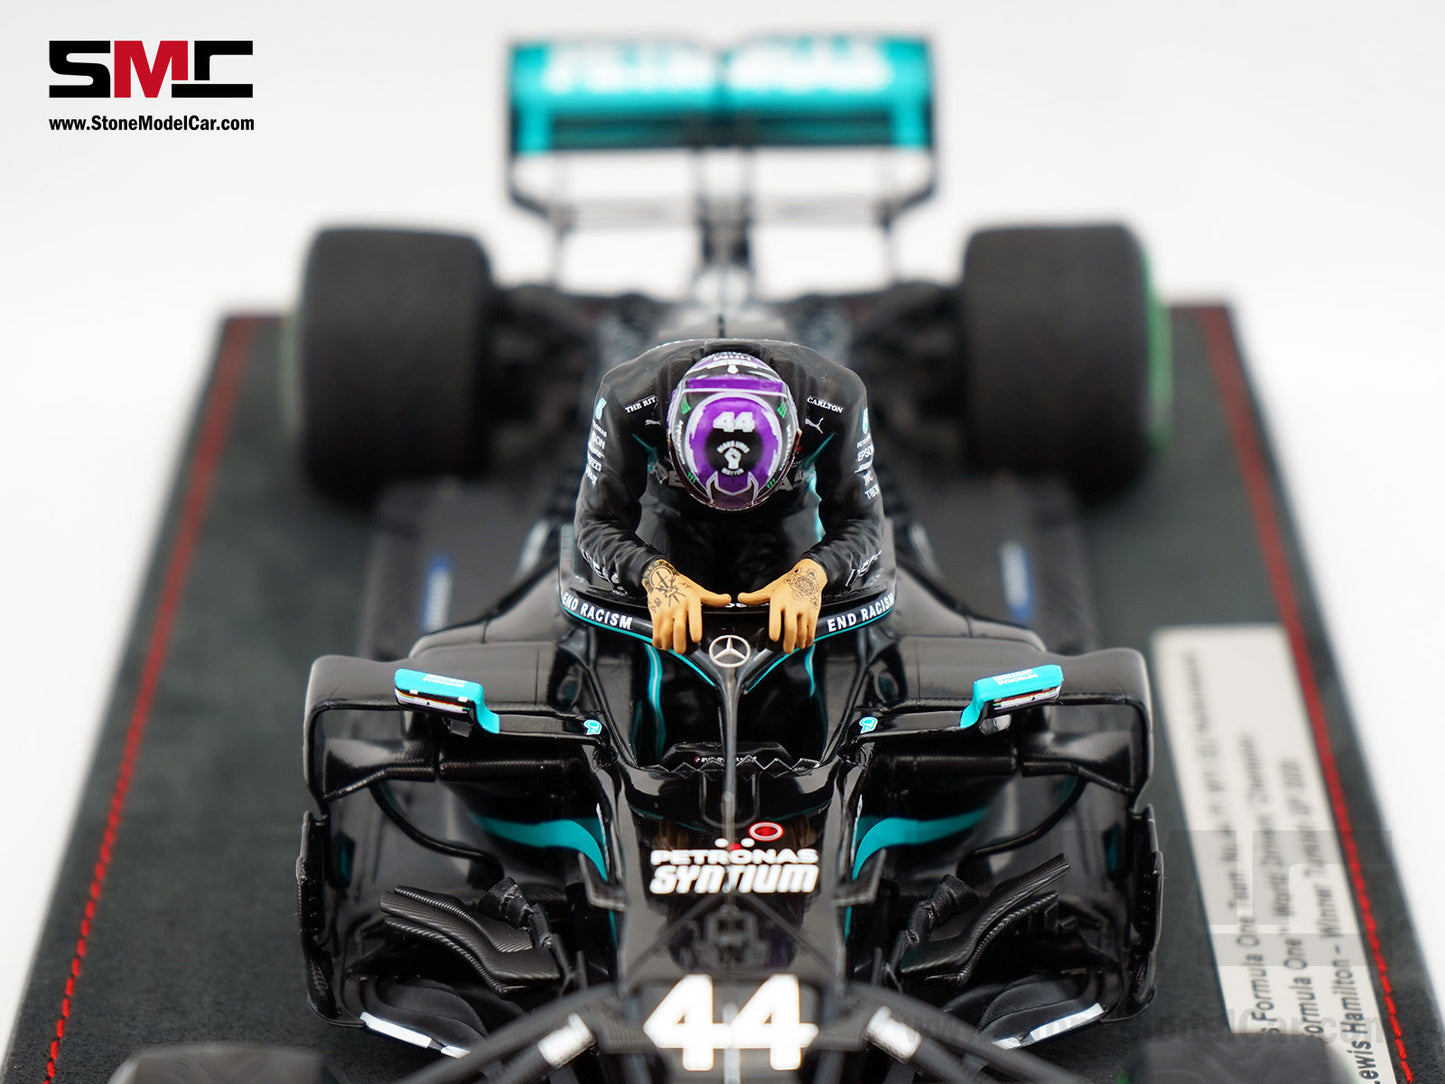 2020 7x World Champion Mercedes F1 W11 #44 Lewis Hamilton Turkey GP 1:18 Spark Special Figure Edition